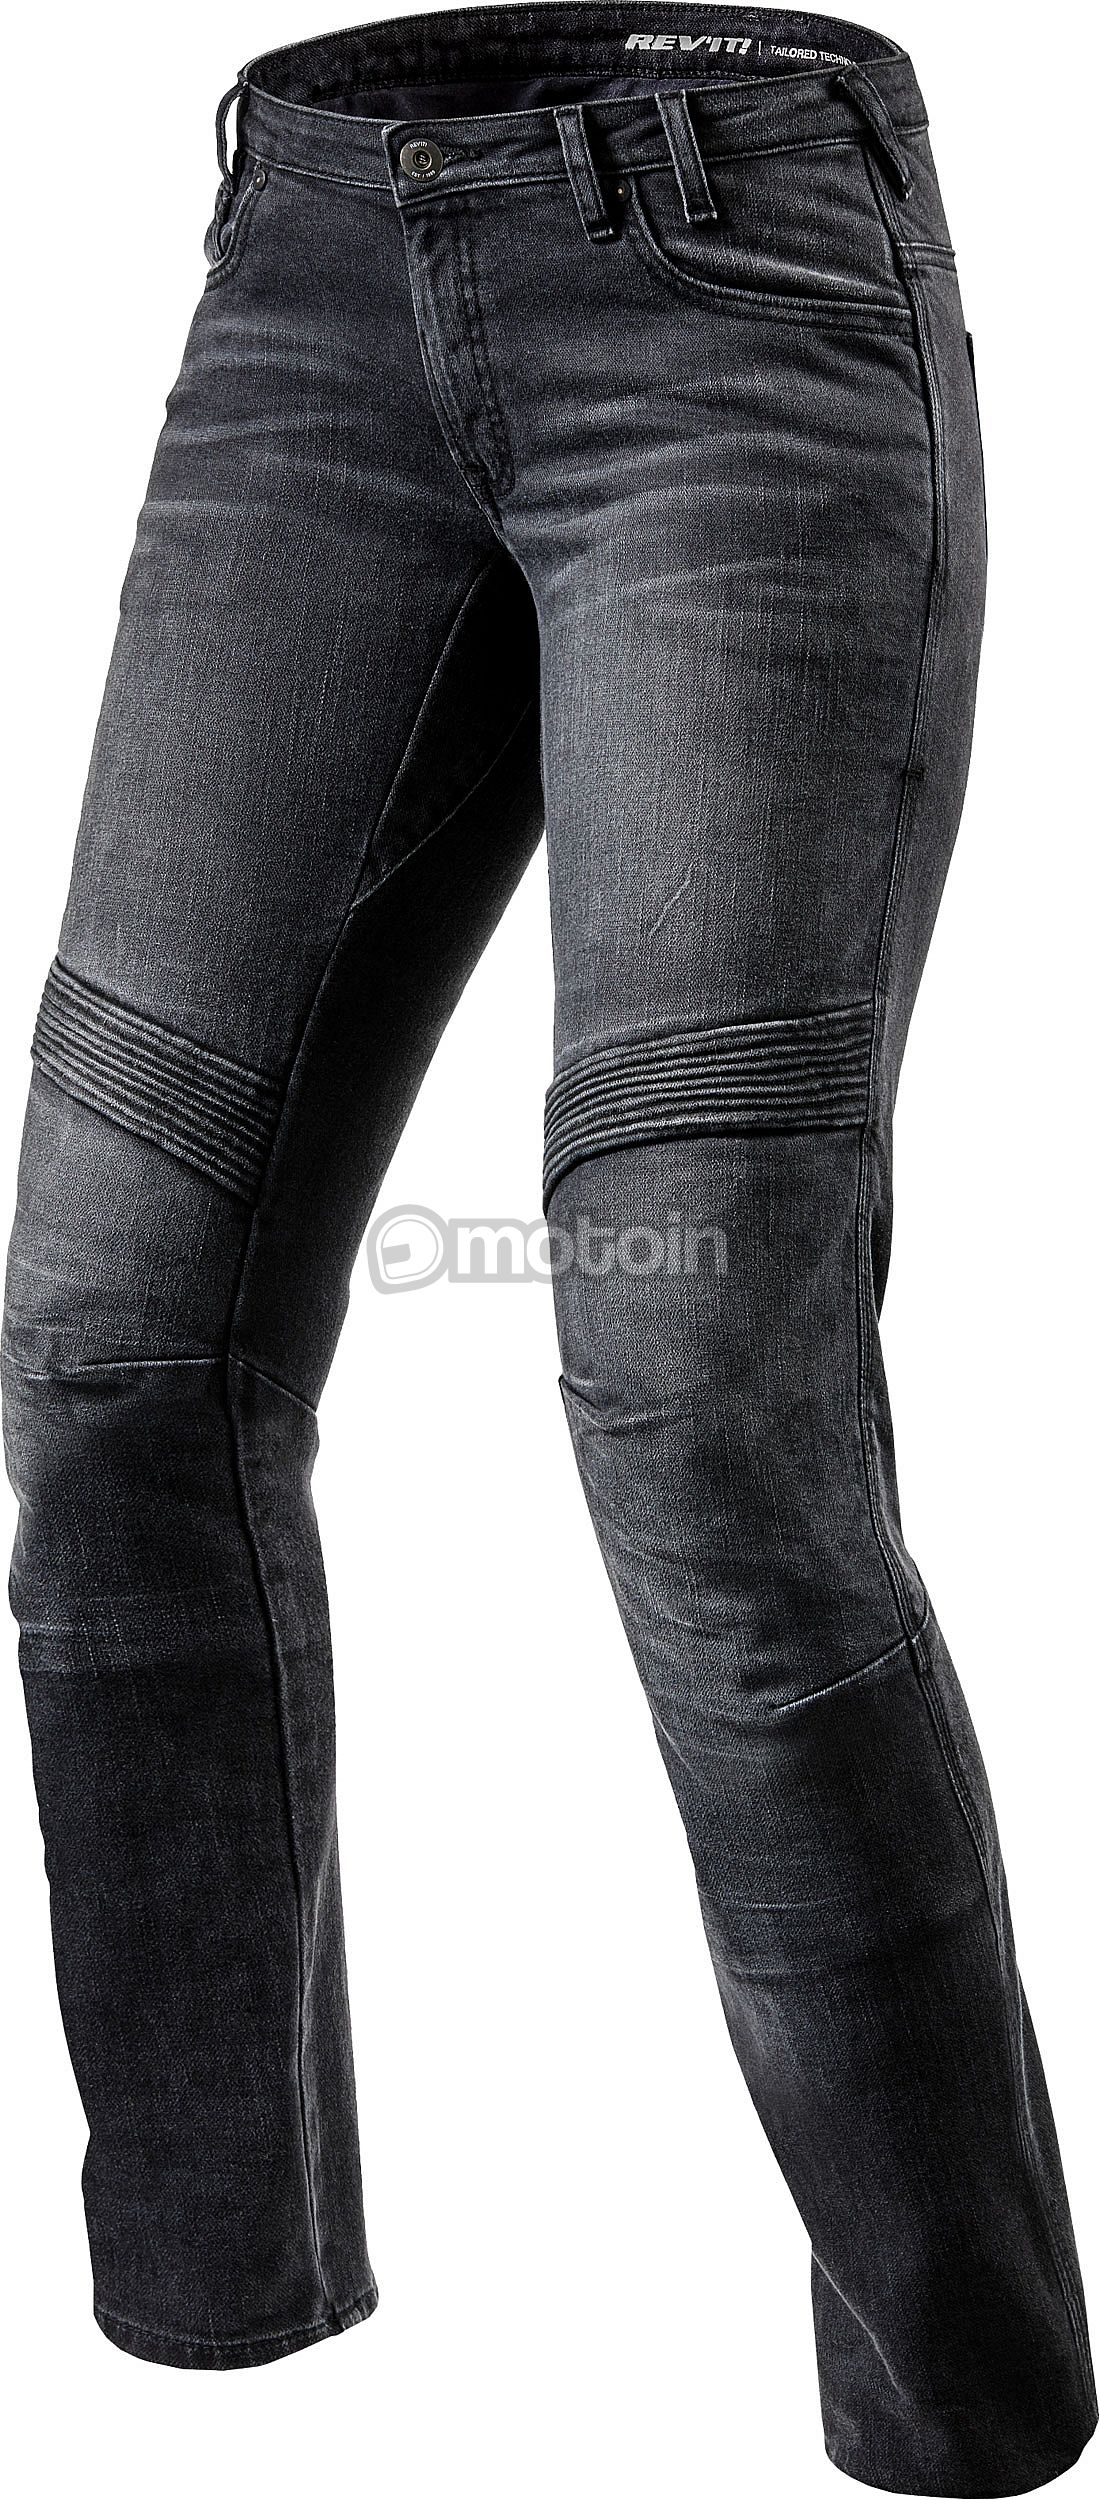 Revit Moto, mulheres de calça jeans